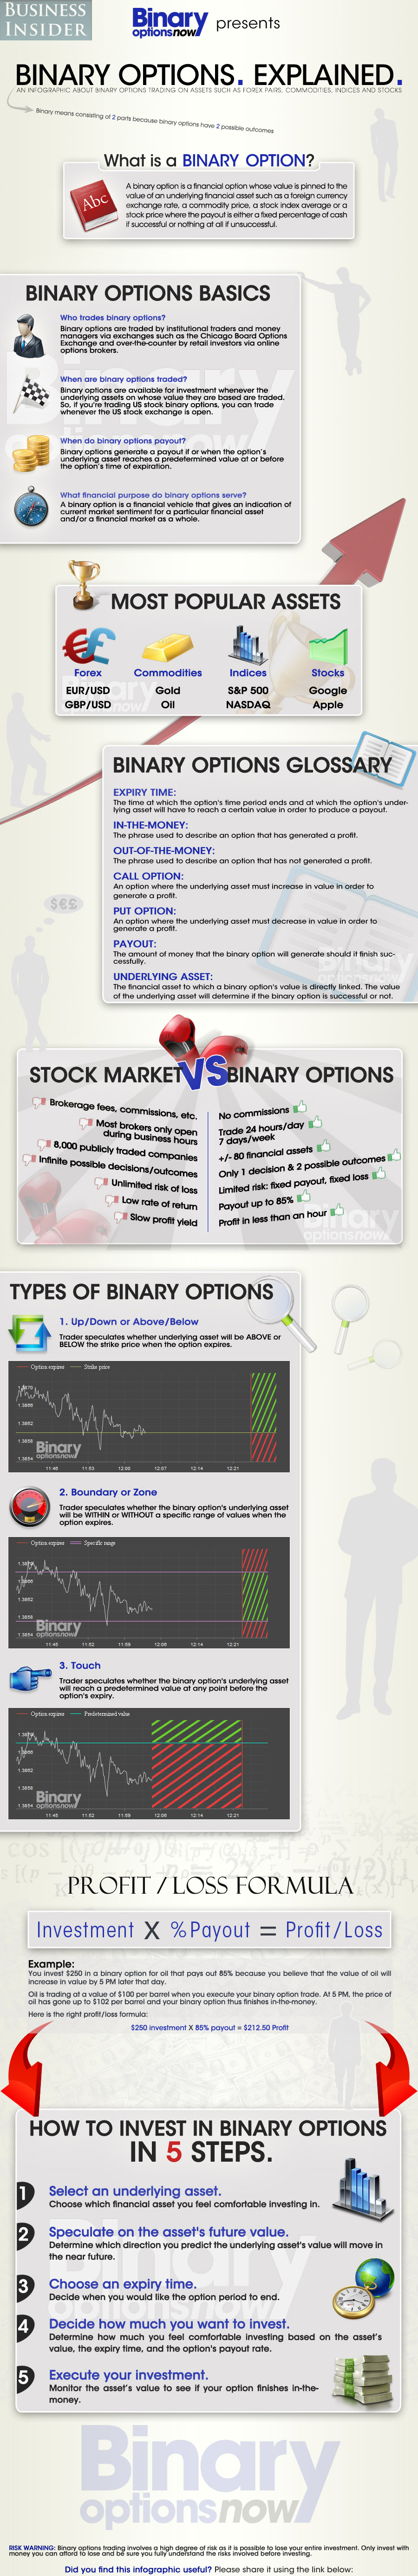 Binary options industry news